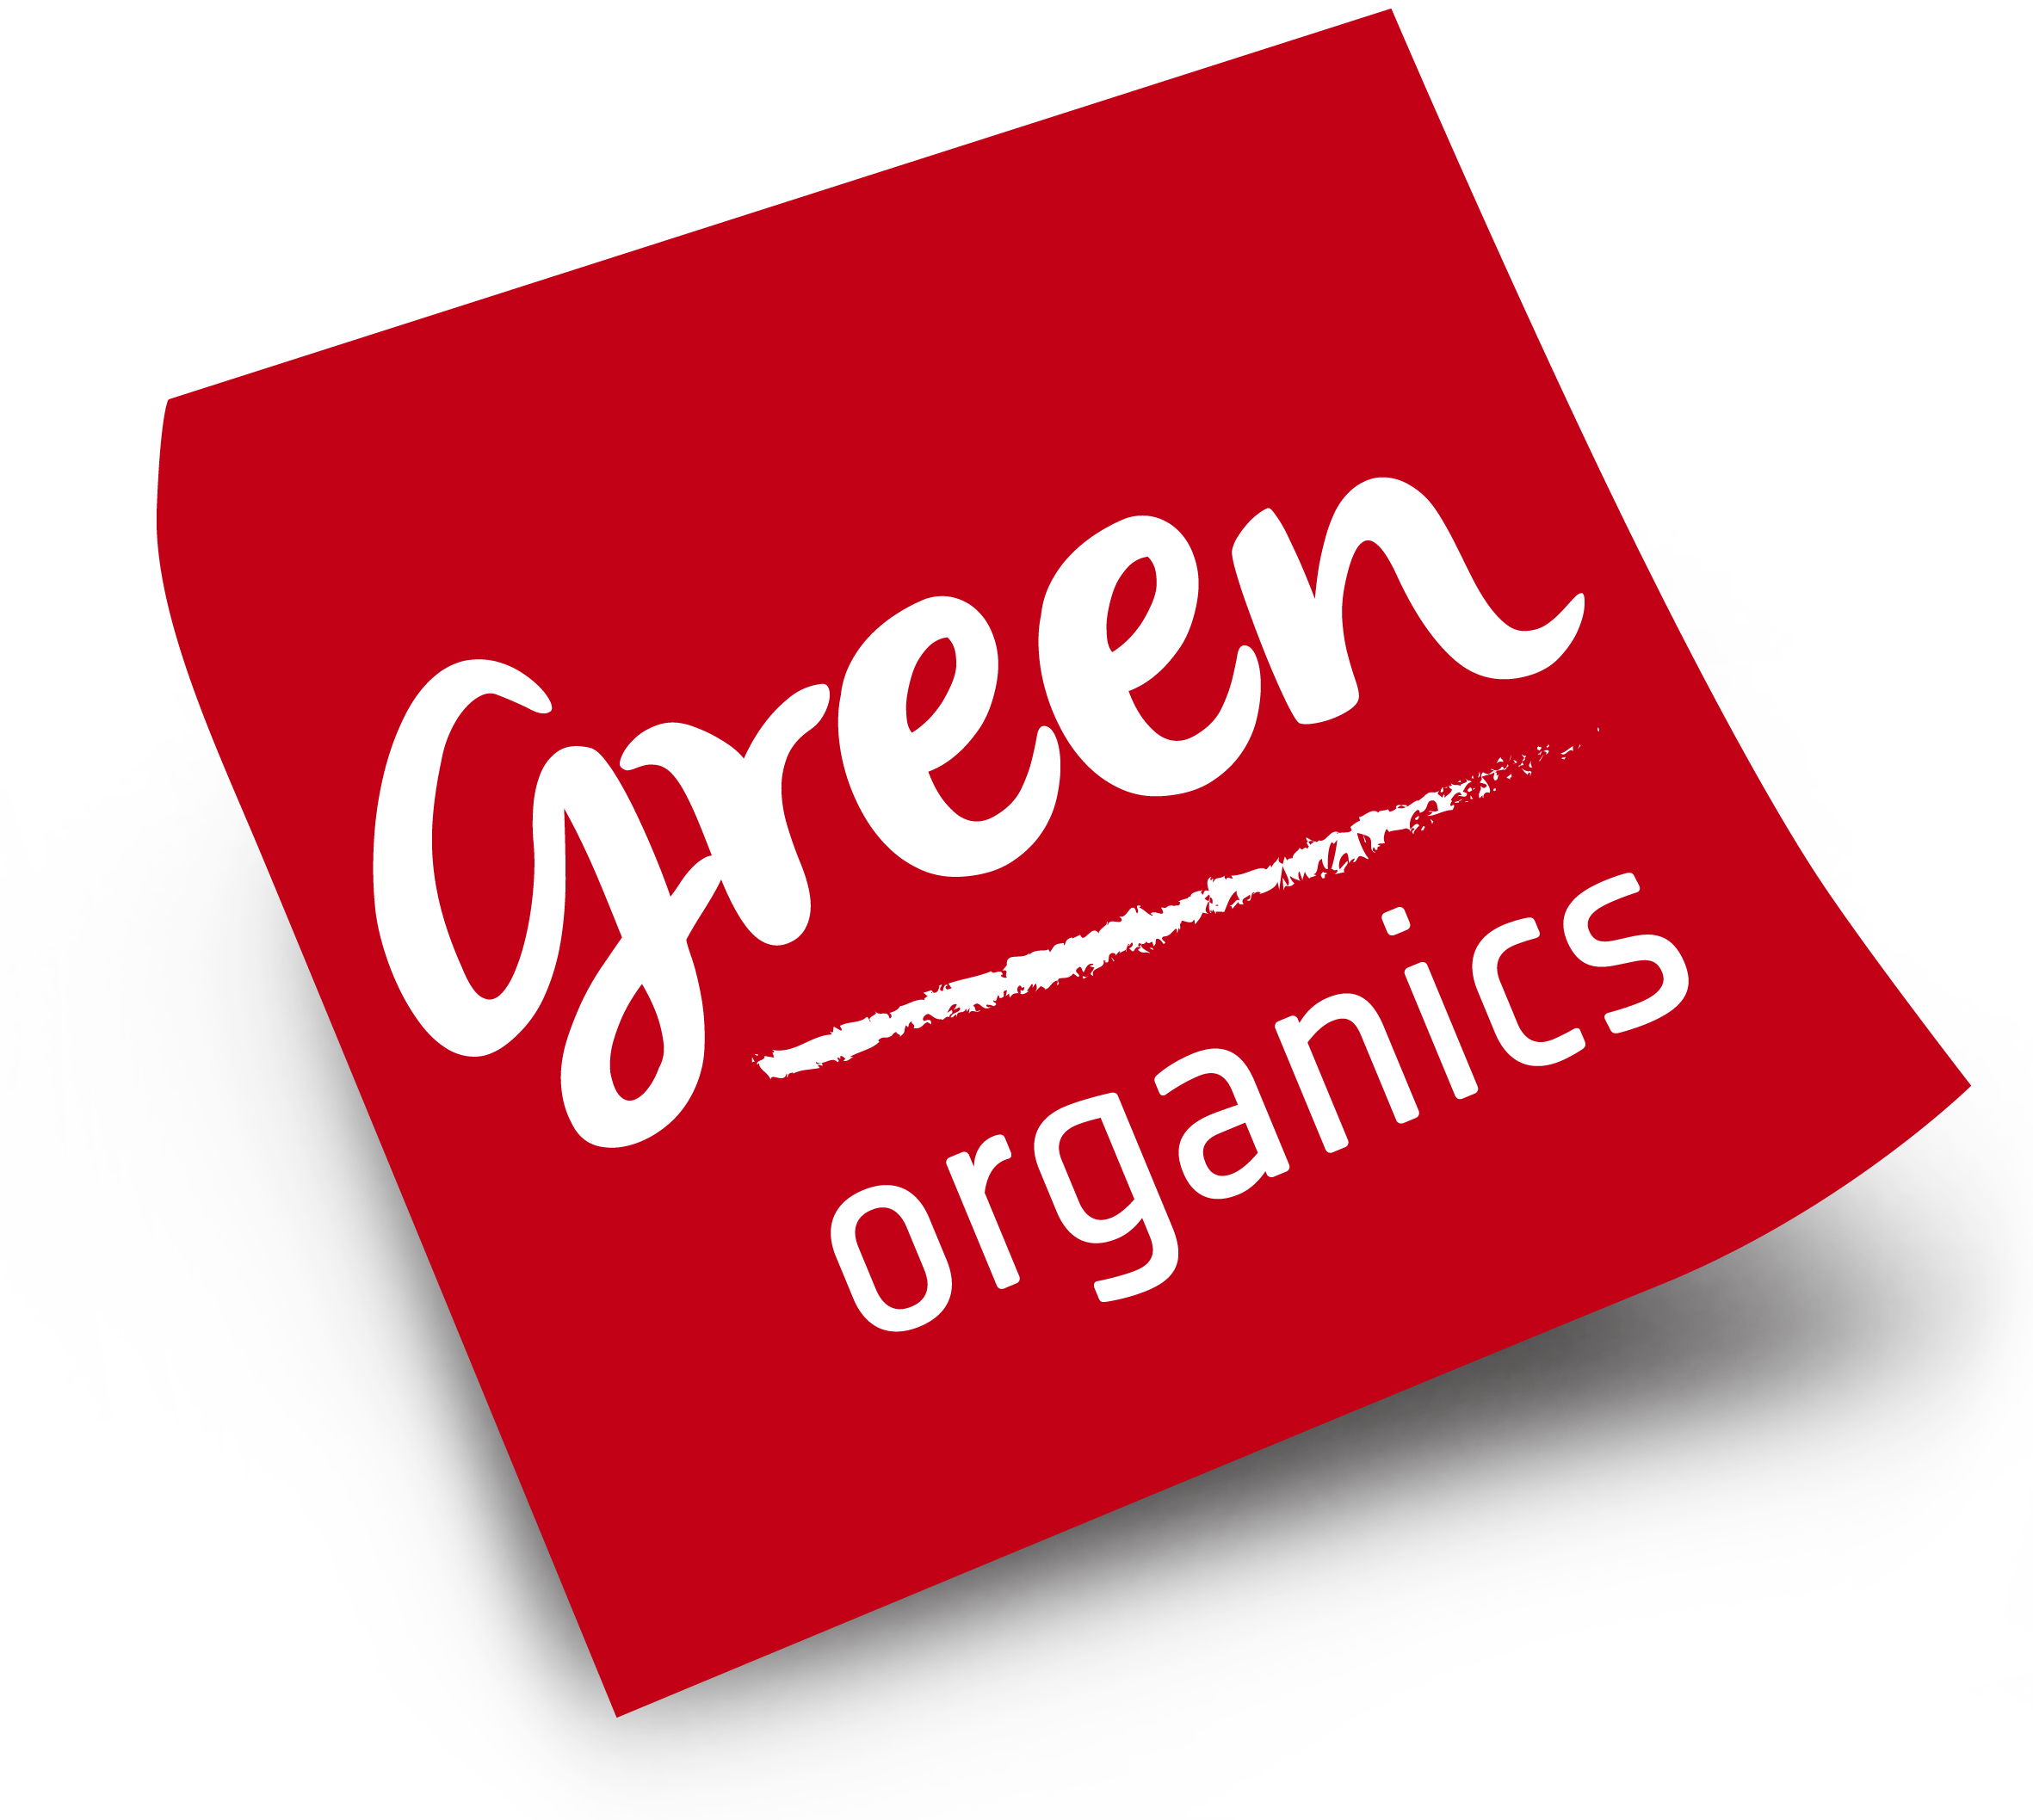 Green organics